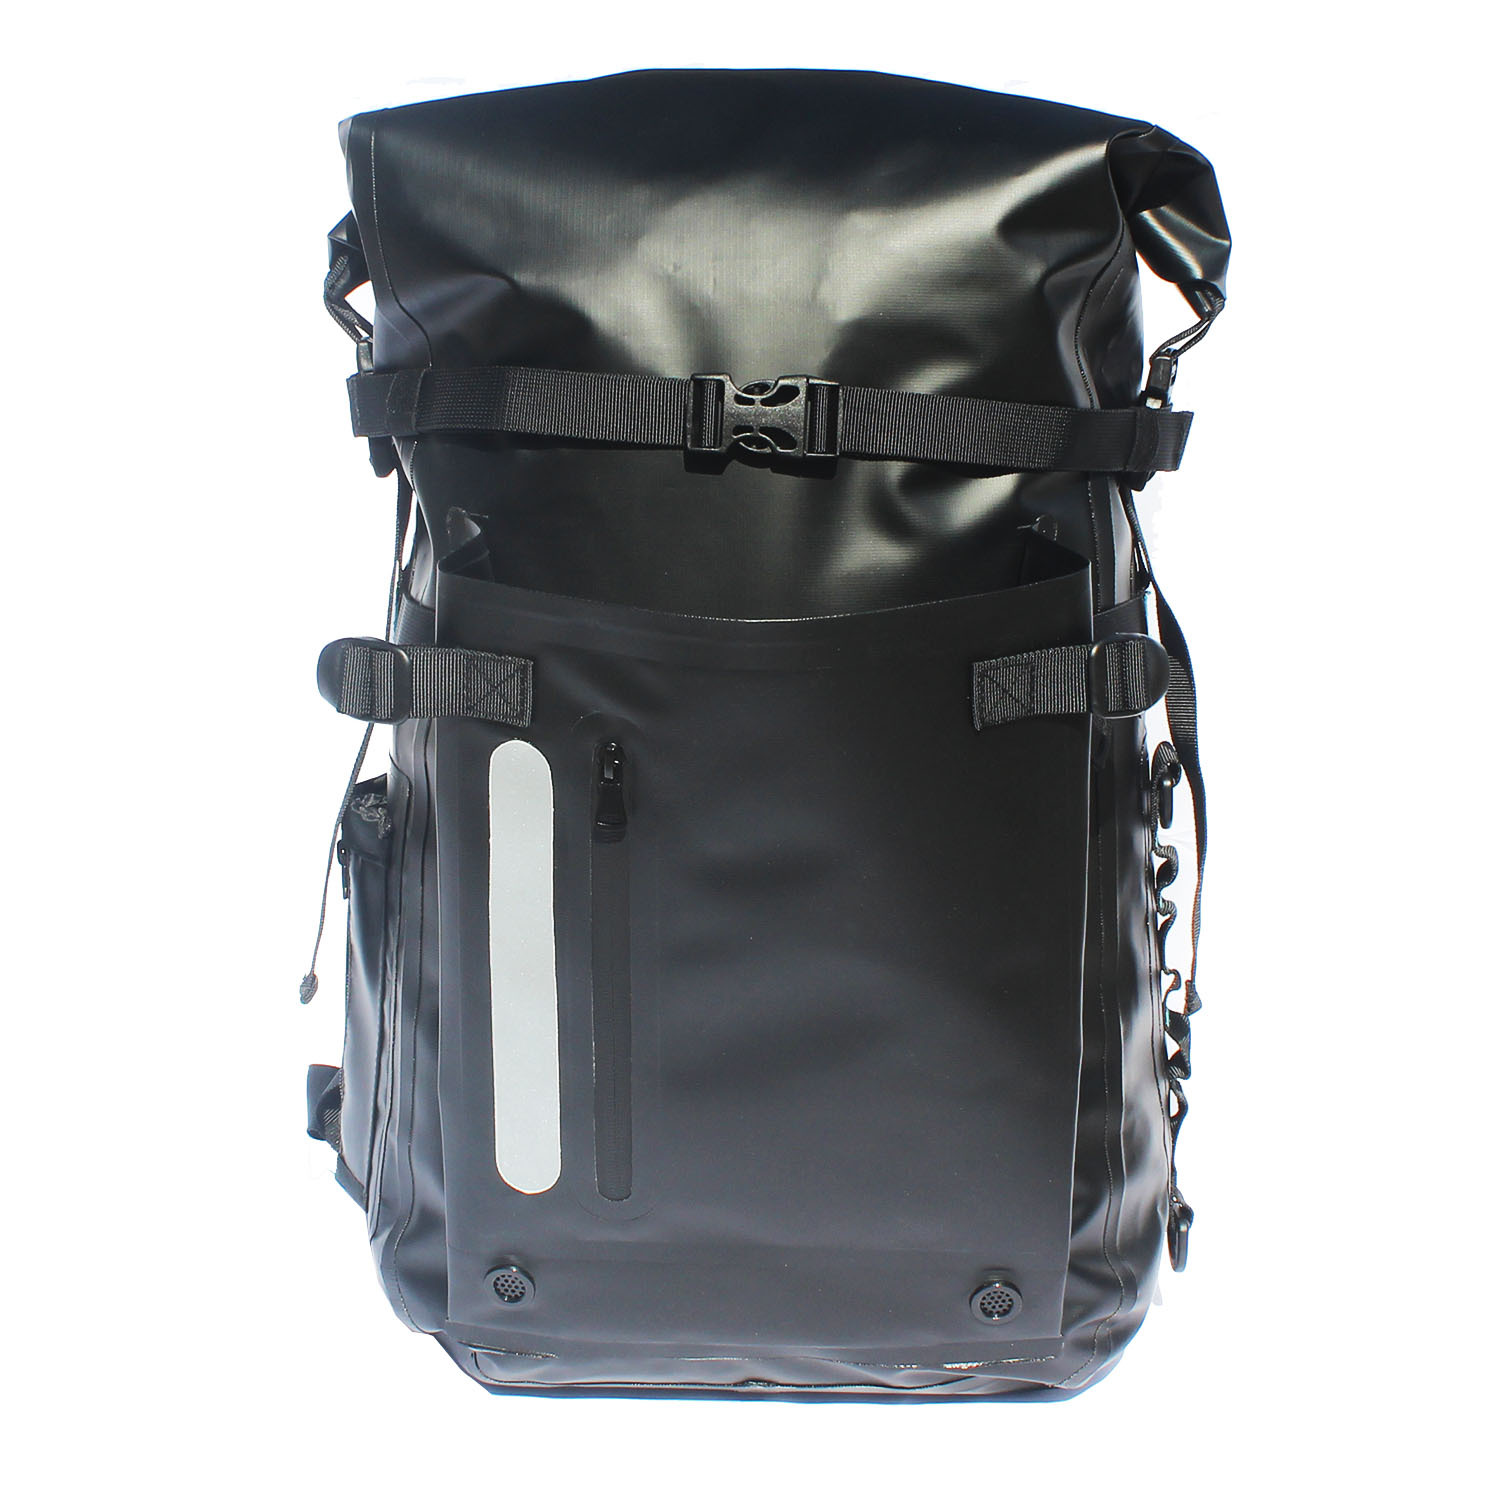 Buy Wholesale China Fishing Bag Fishing Tackle Bags Multifunctional Fishing  Backpack Waterproof Fishing Tackle Backpack & Fishing Bag at USD 9.05